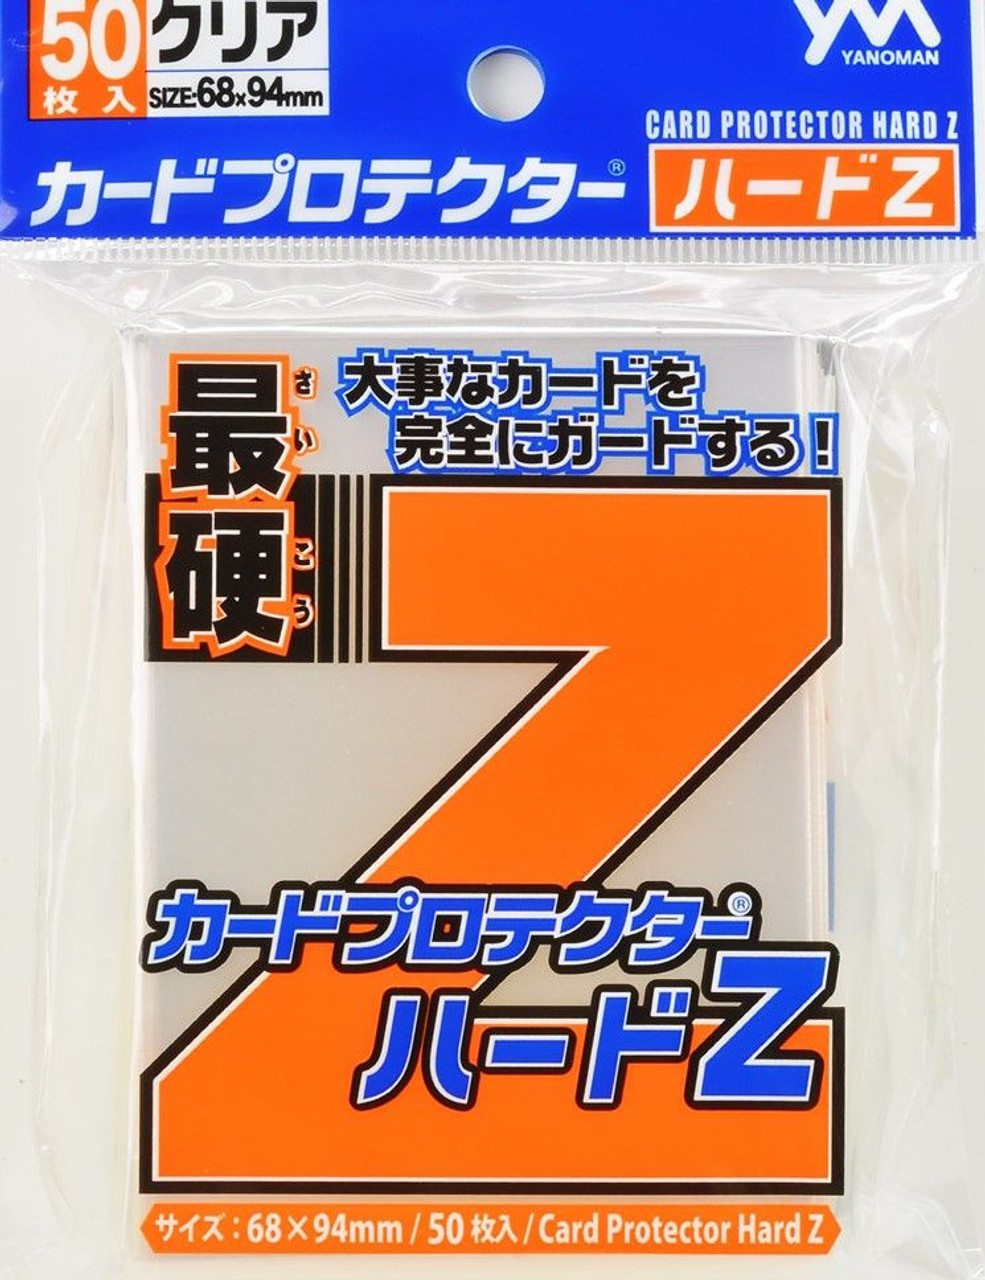 Yanoman Card Protector Hard Z ( Card Sleeve ) x 50 Set